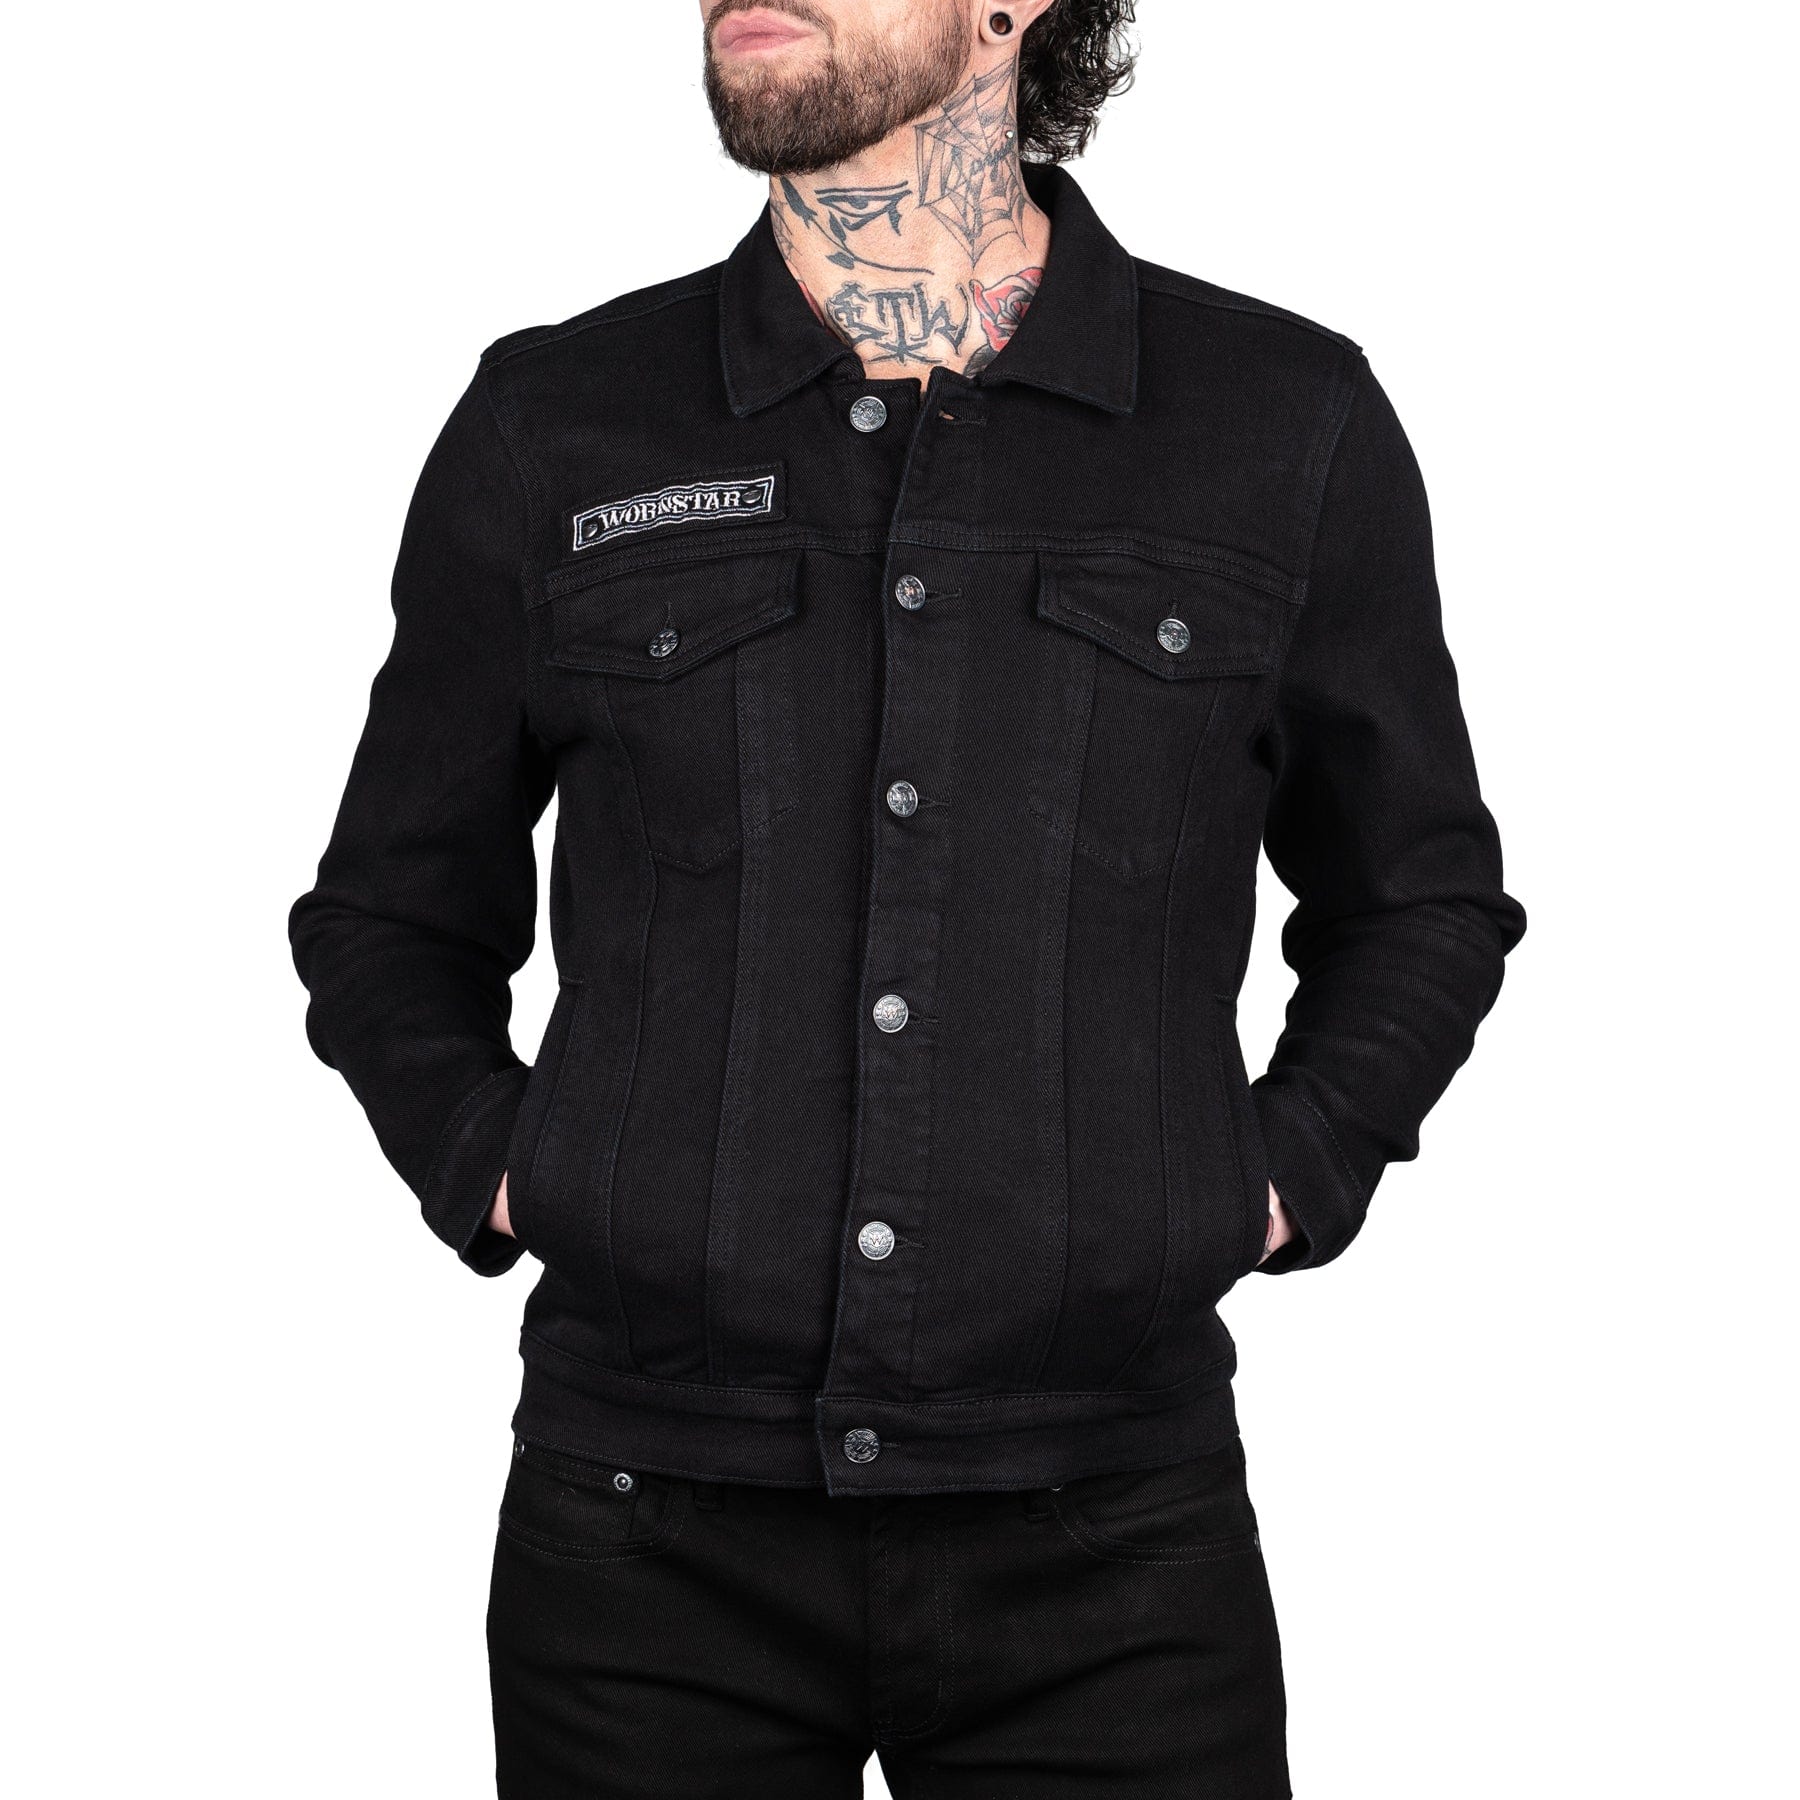 Wornstar Clothing Mens Jacket. Idolmaker Denim Jacket - Black